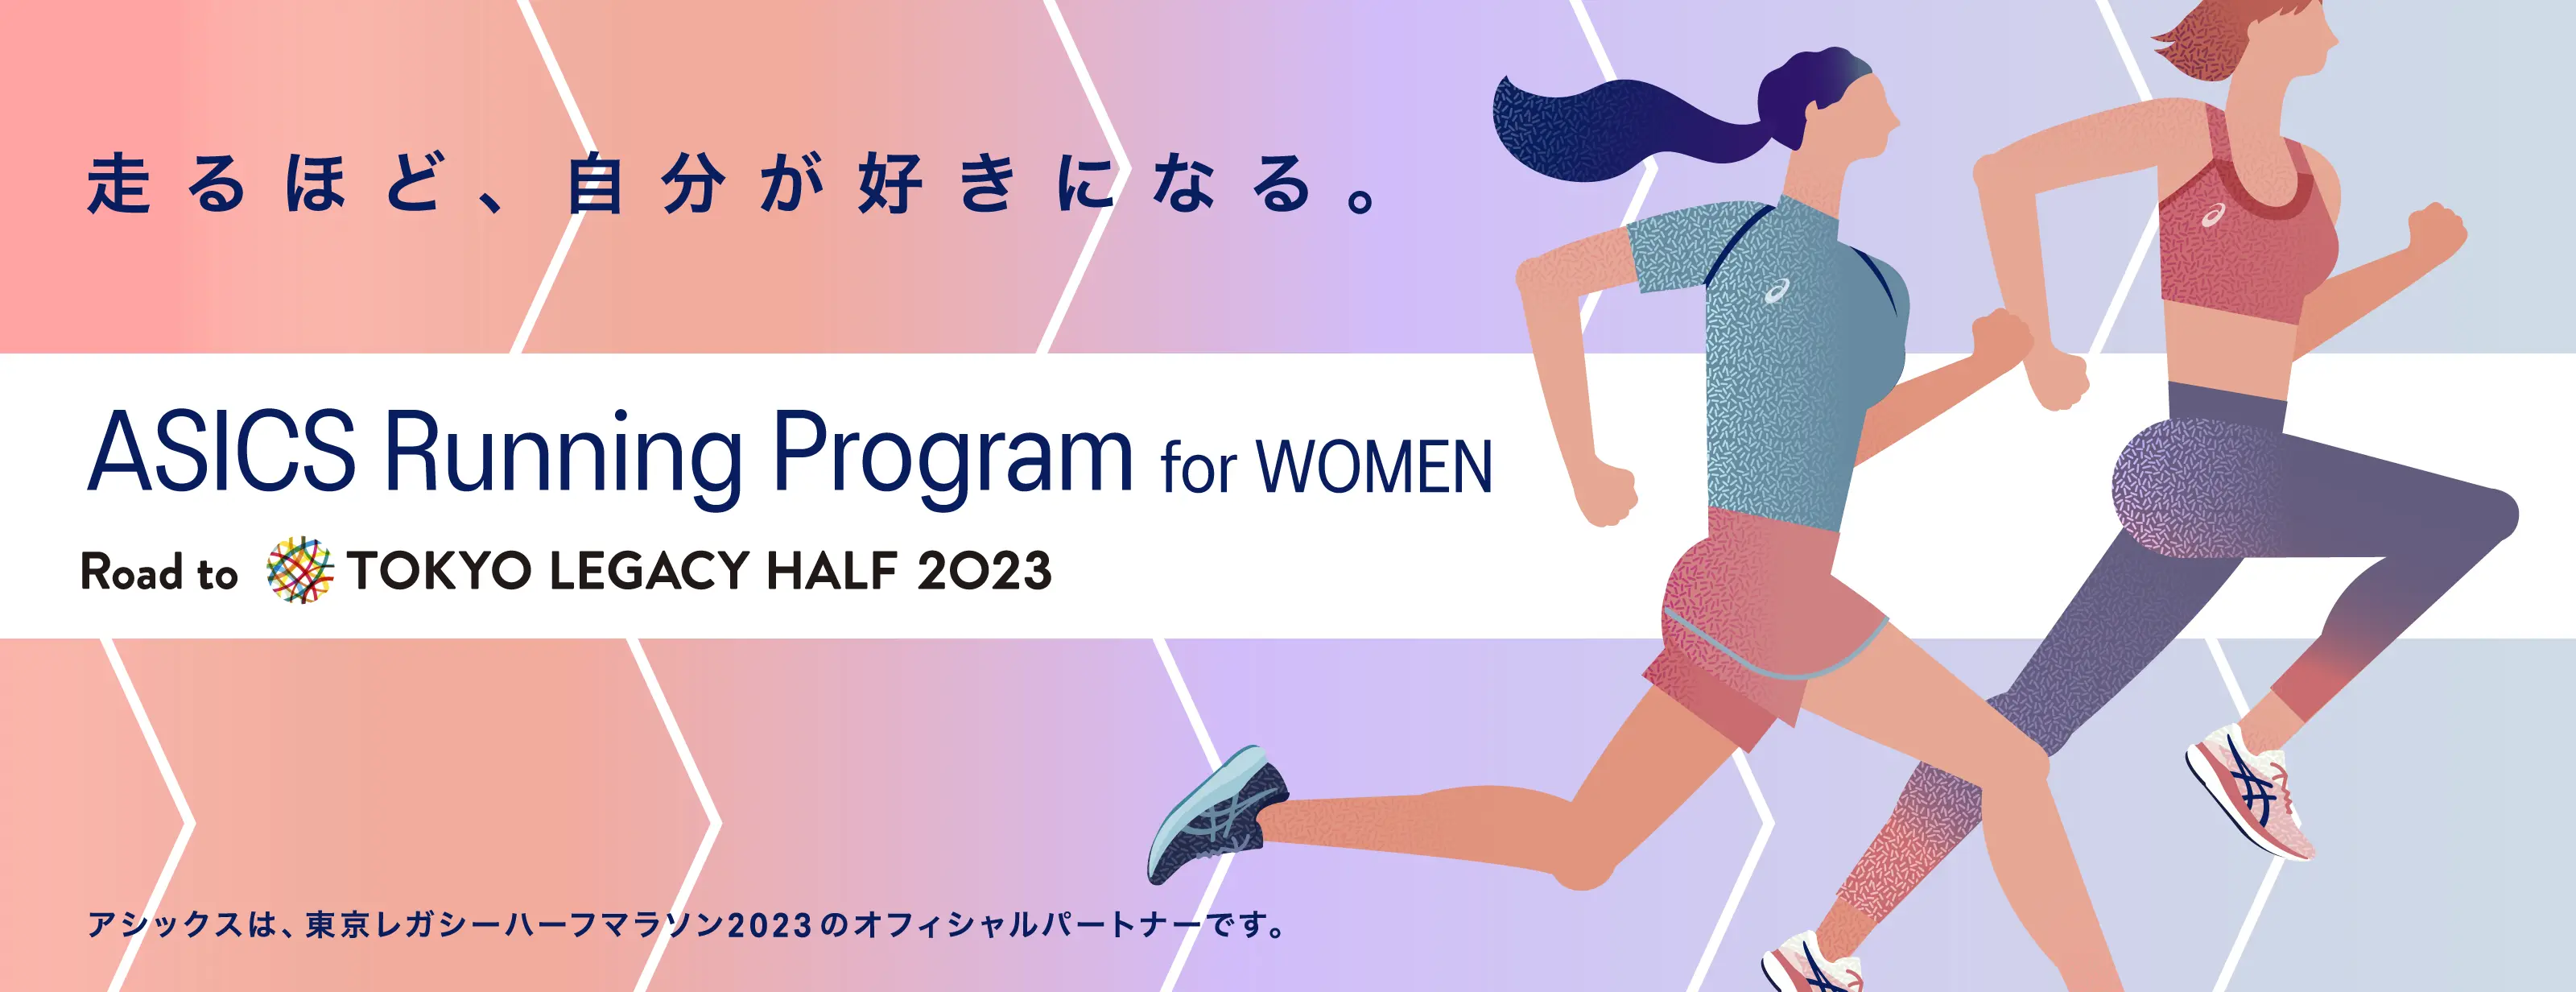 ASICS RUNNING PROGRAM for WOMEN Road to TOKYO LEGACY HALF 2023